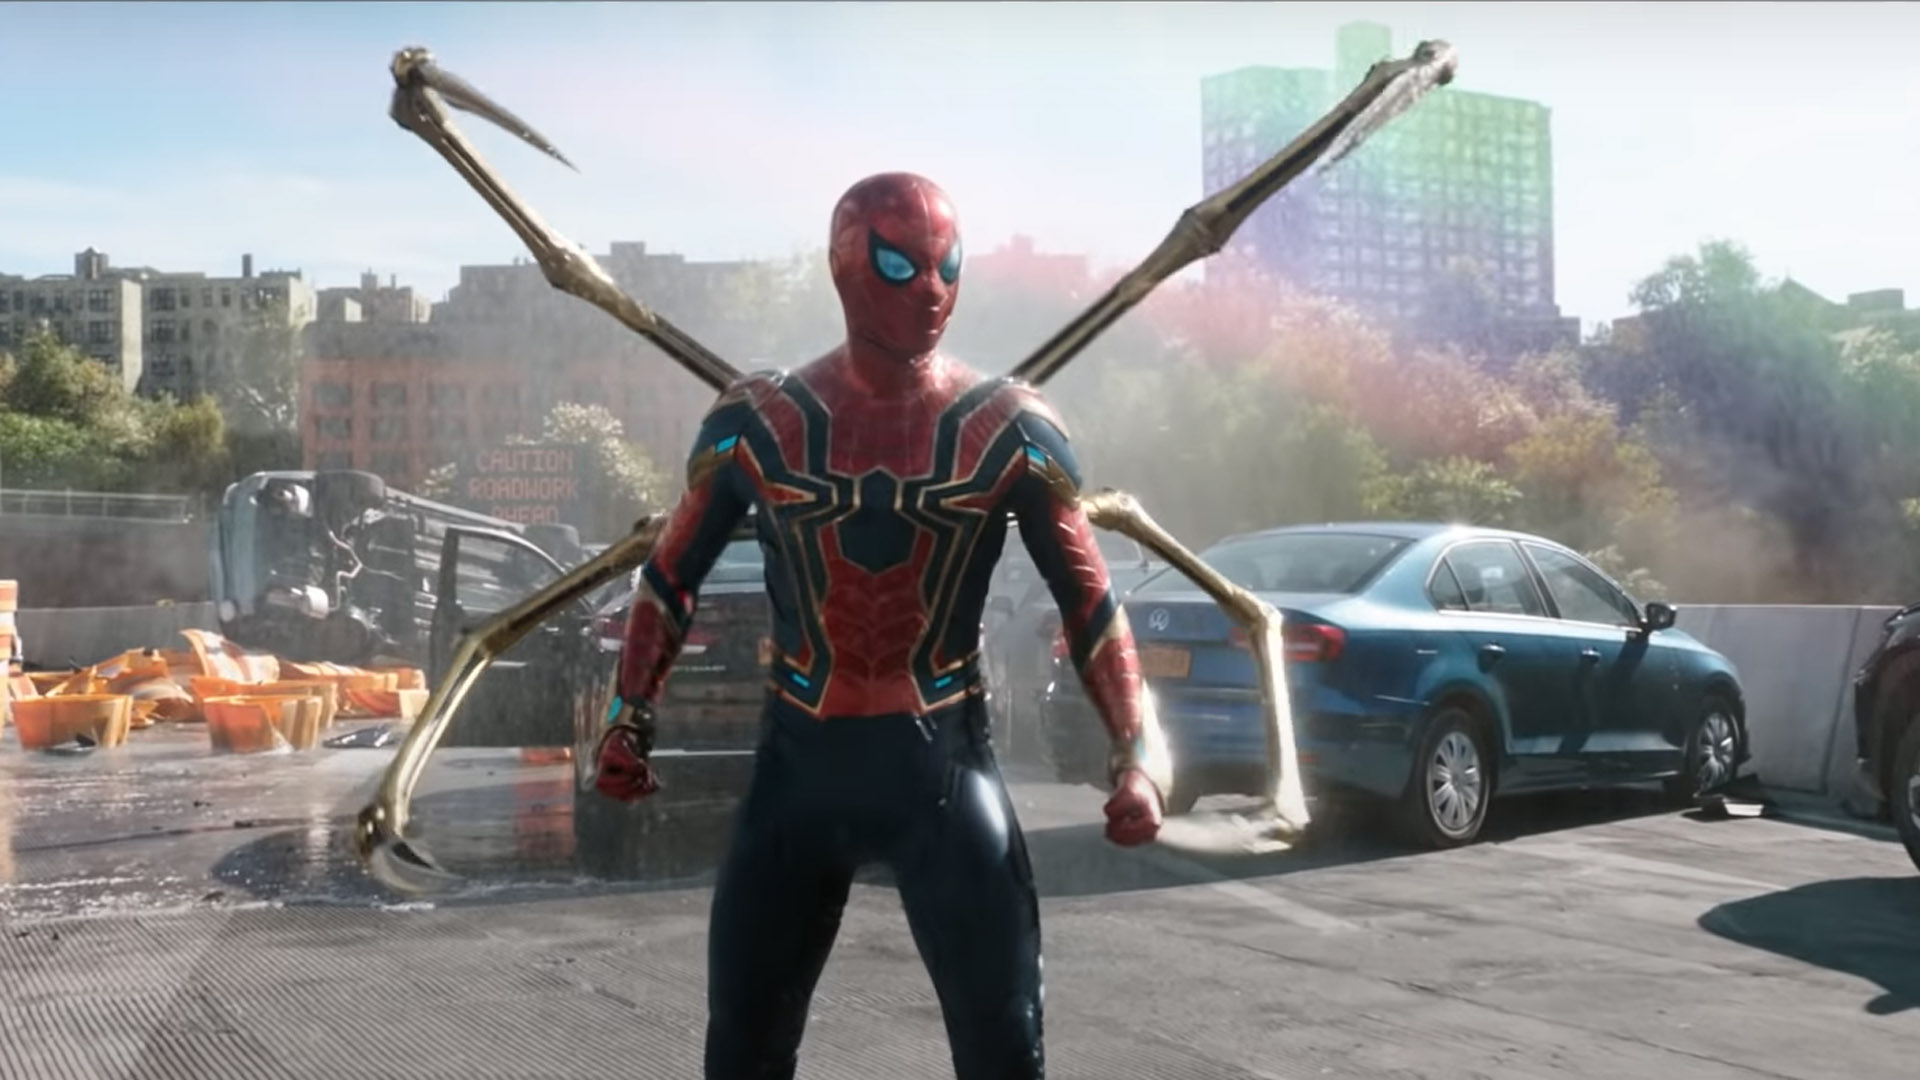 Spider-Man: No Way Home: release date, cast, plot, trailer and more |  TechRadar